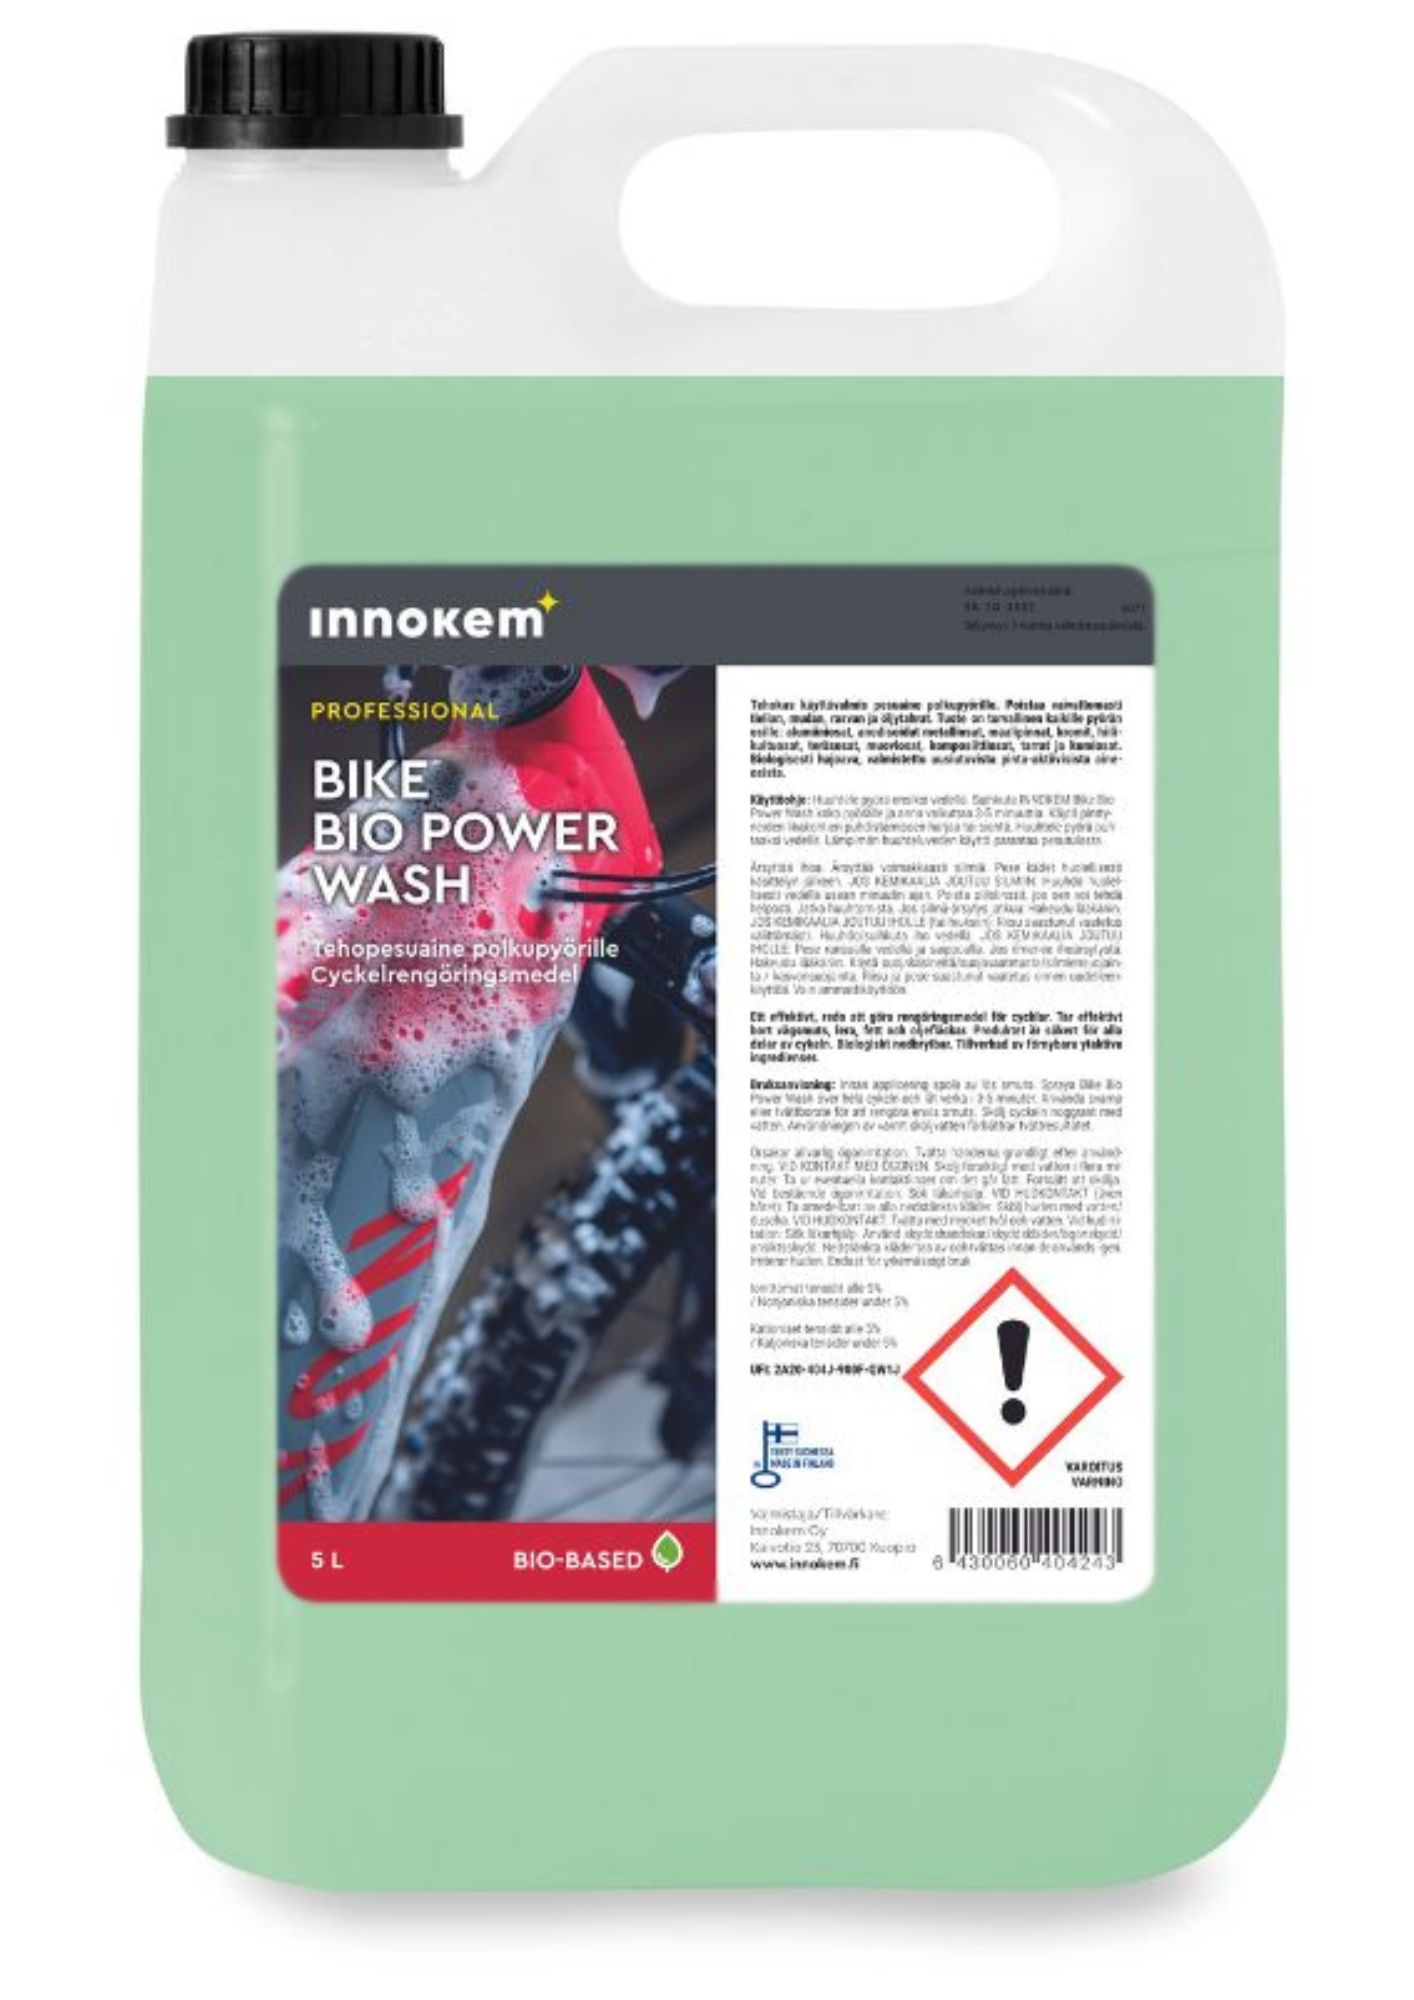 innokem bike bio power wash 5l